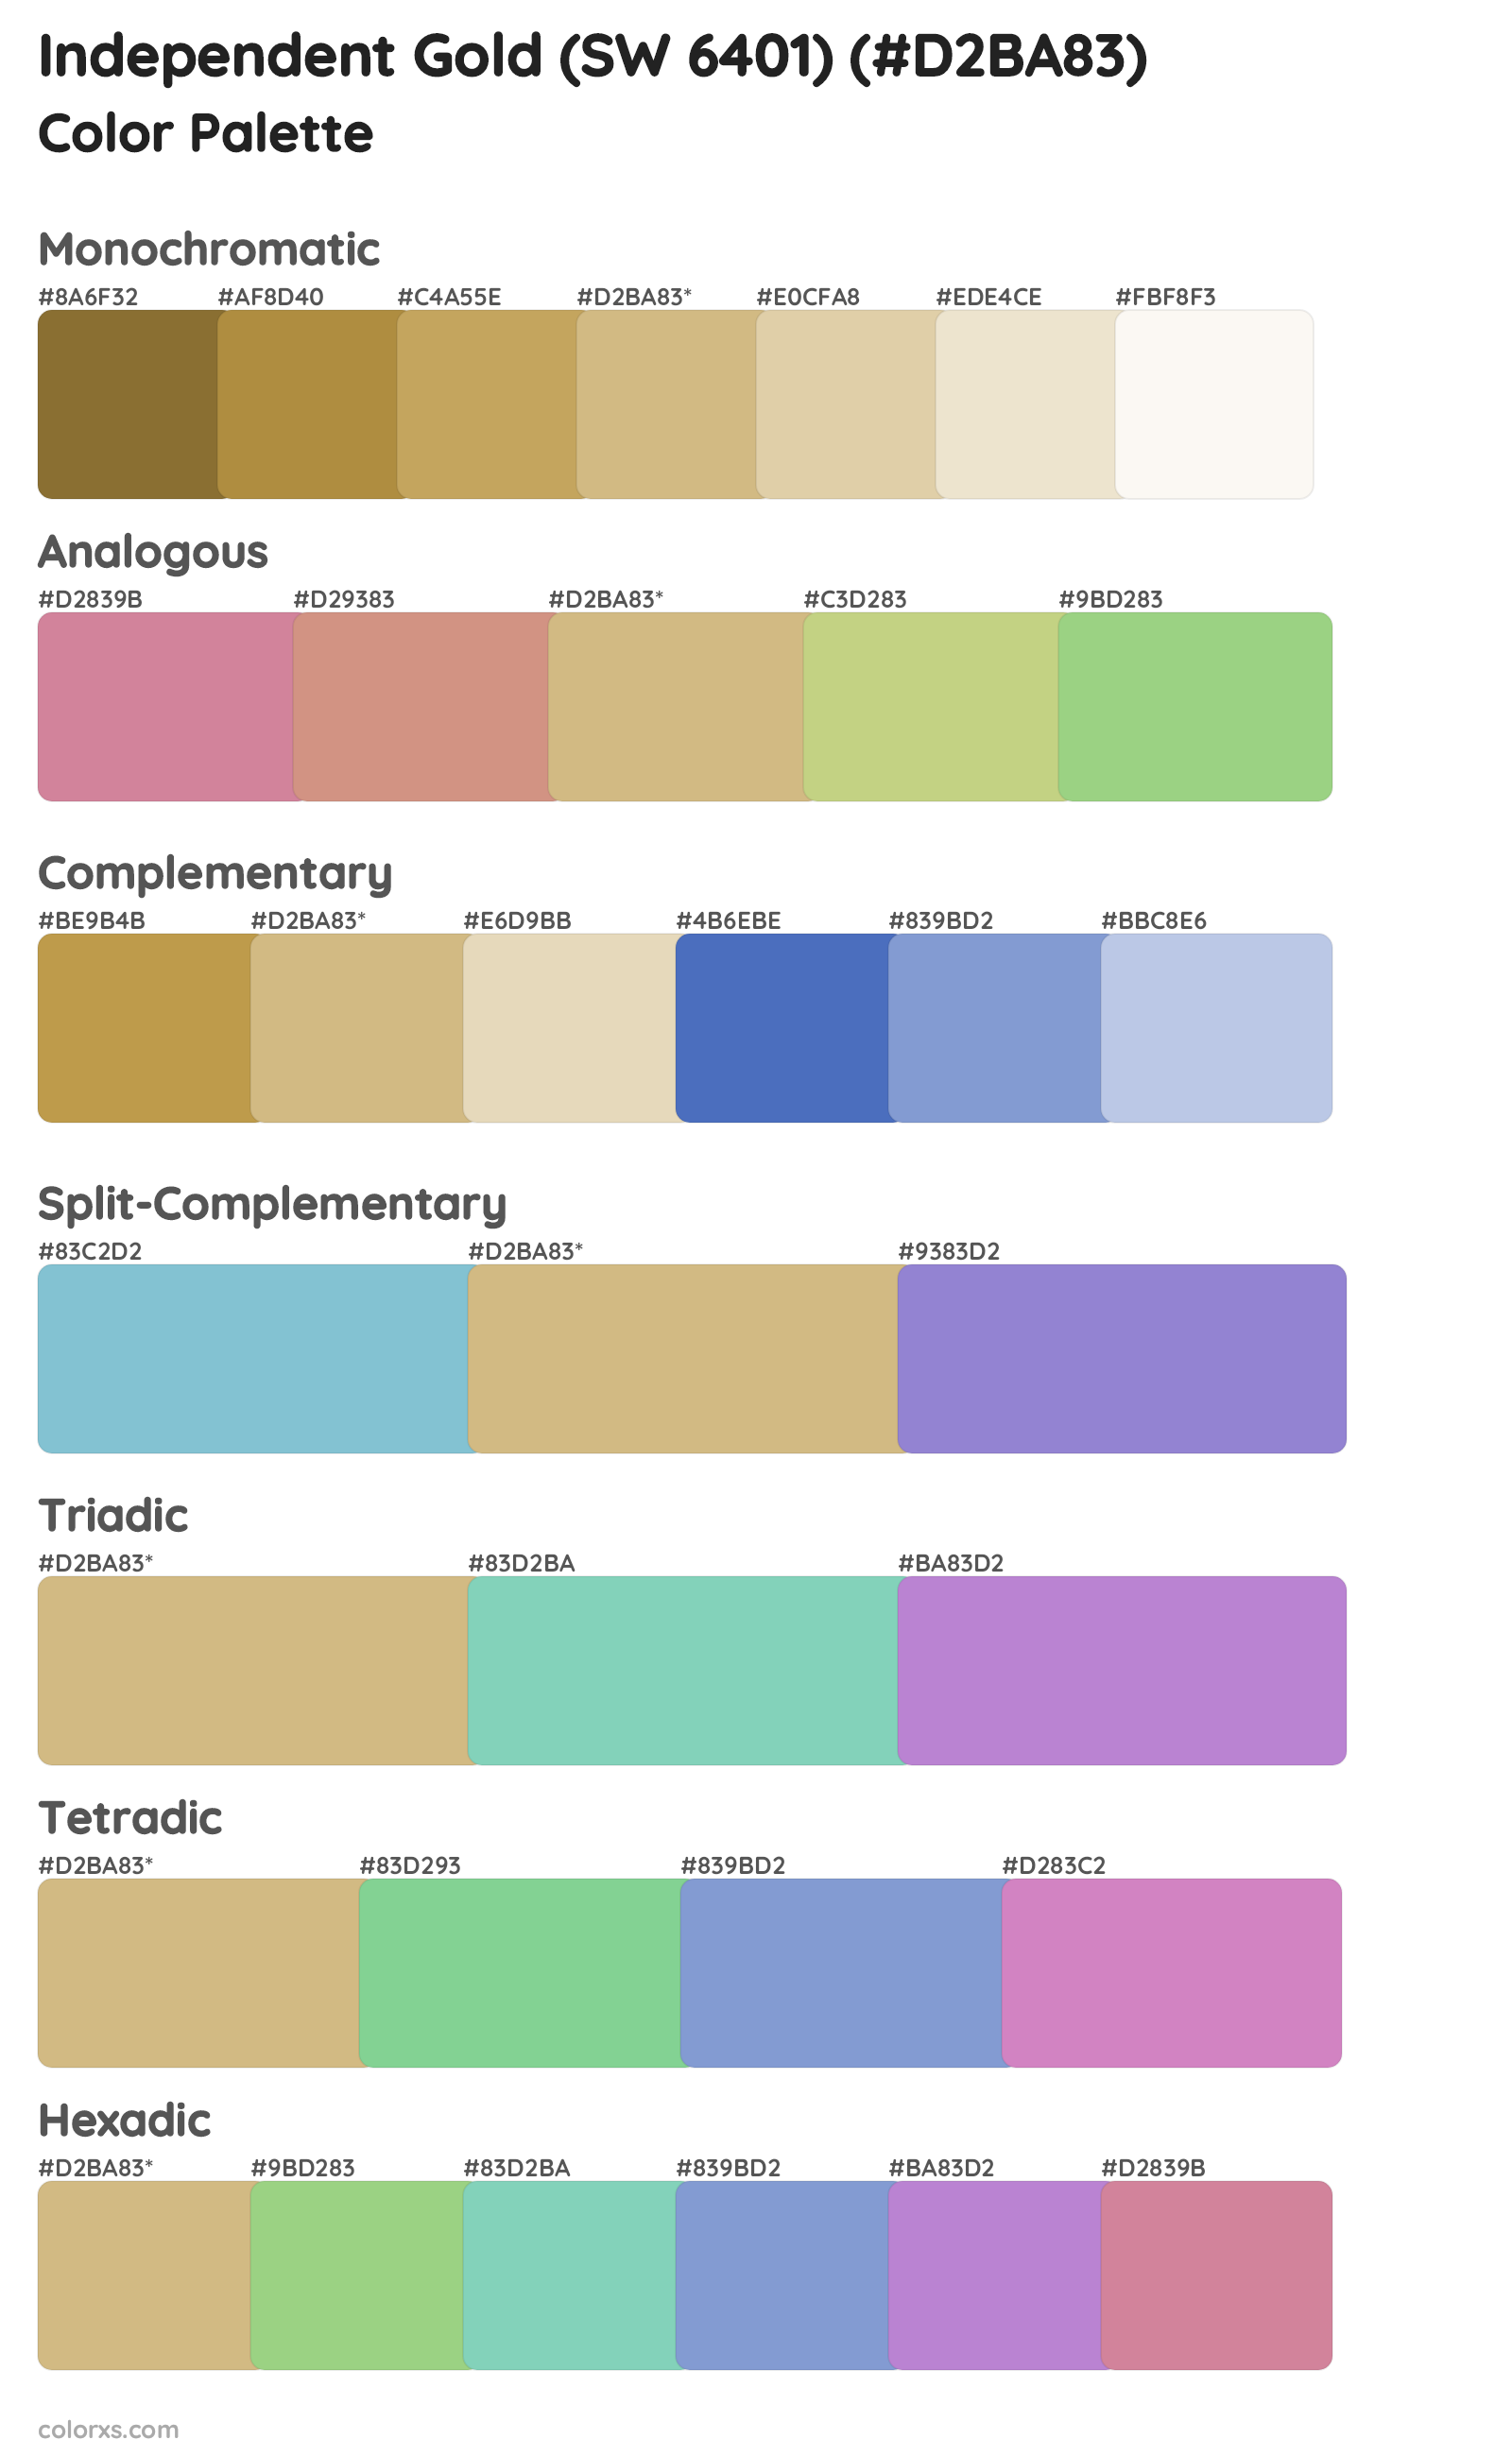 Independent Gold (SW 6401) Color Scheme Palettes